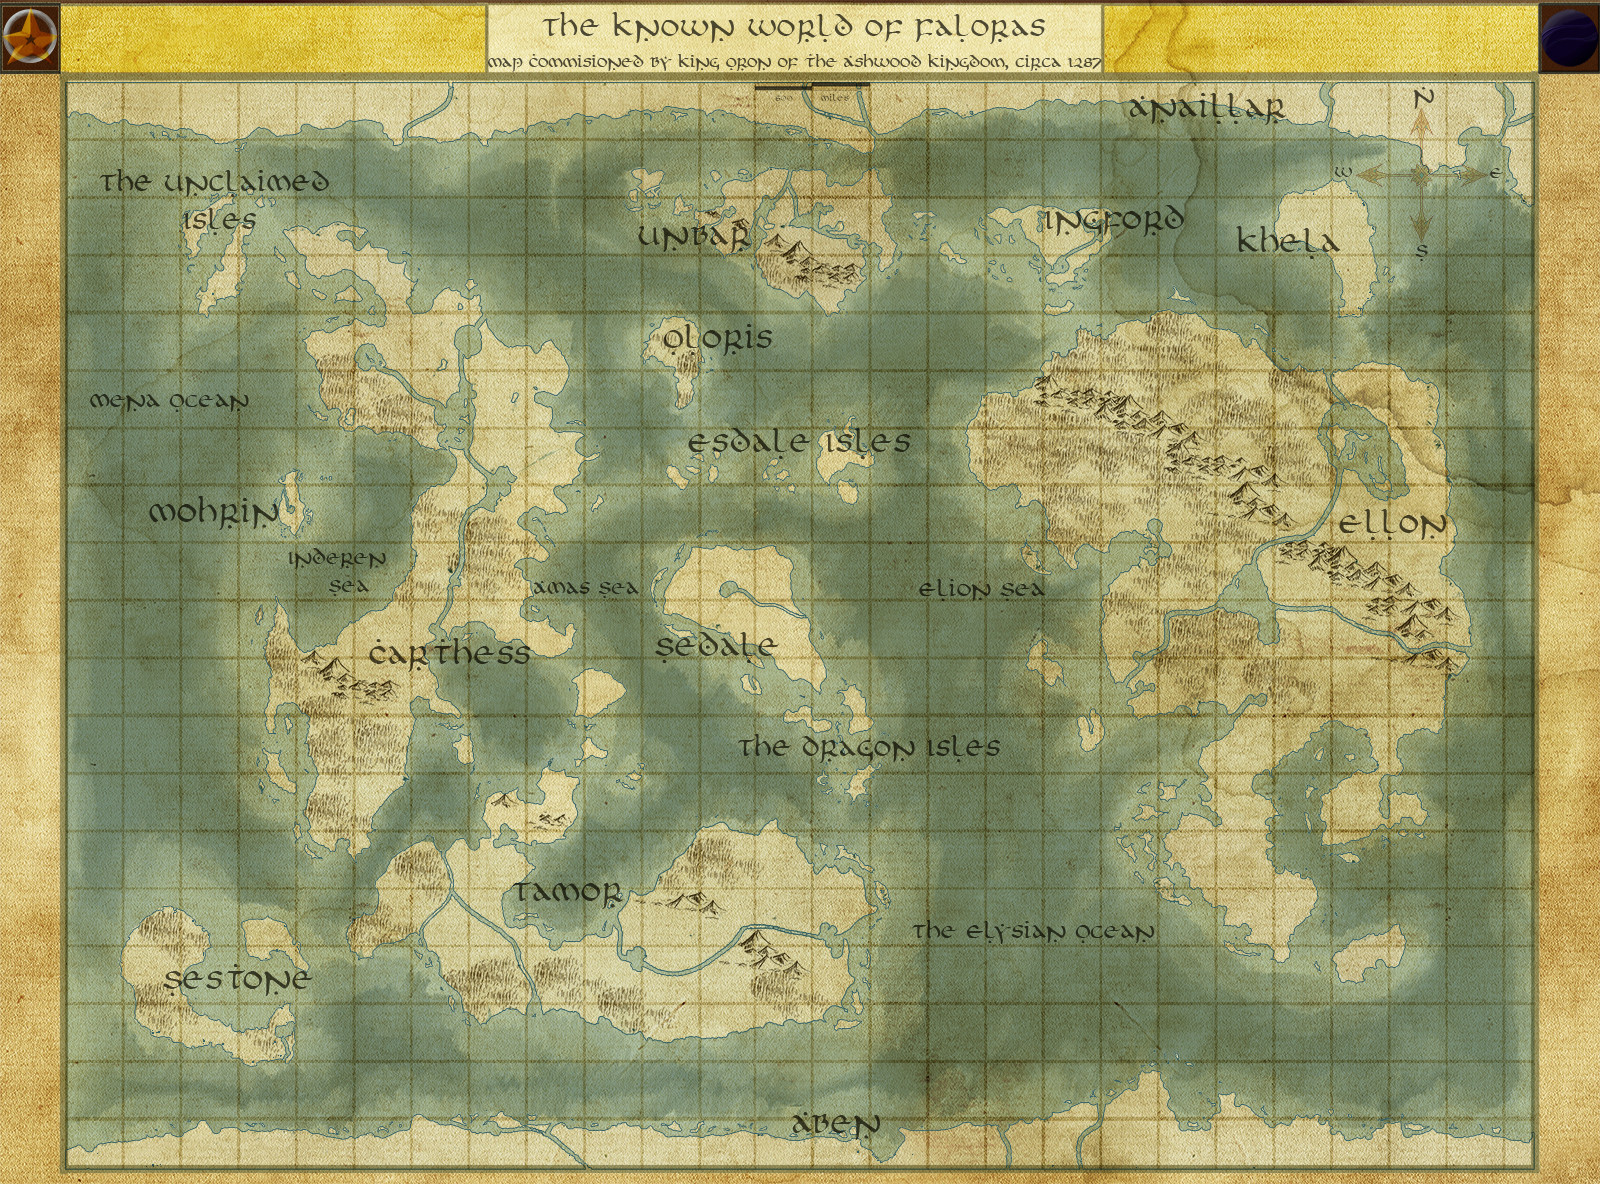 Final map of Faloras